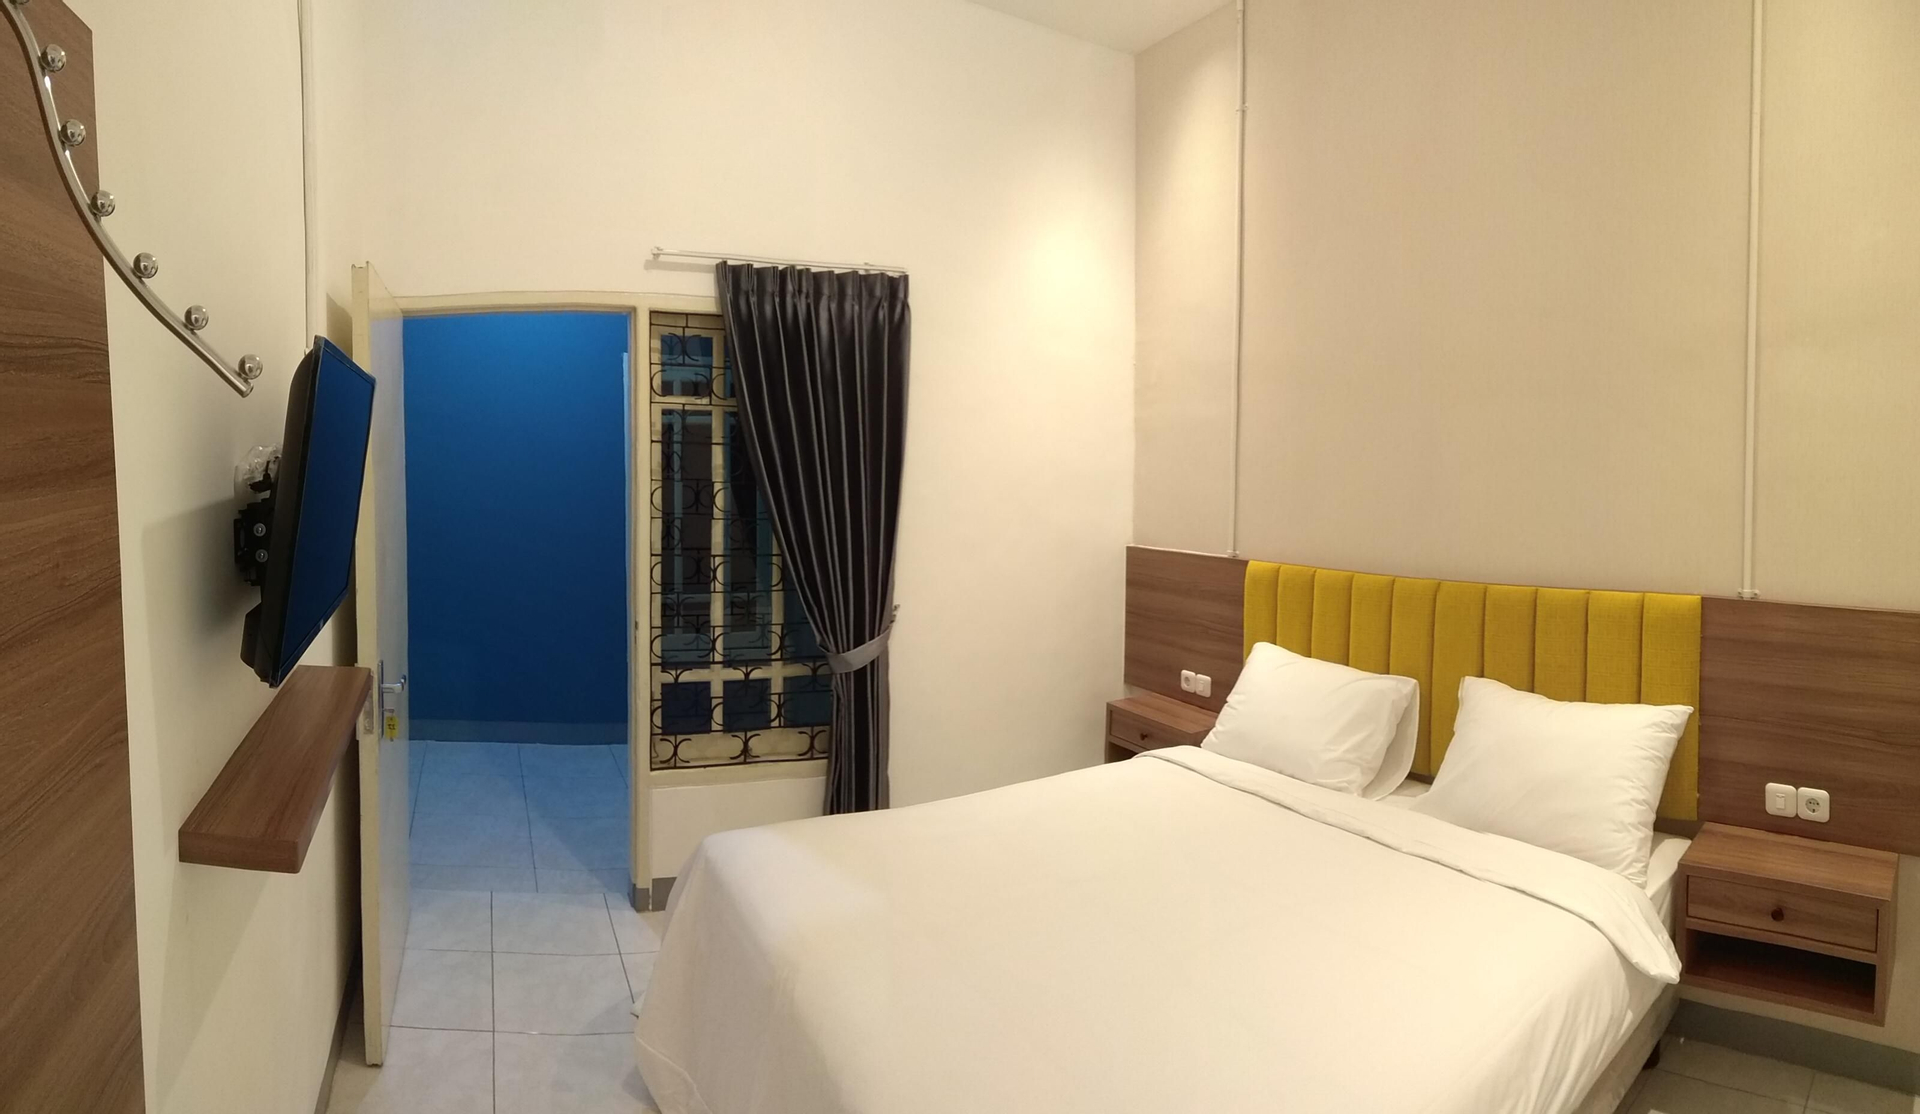 Bedroom 1, Kokonut Guesthouse, Surabaya